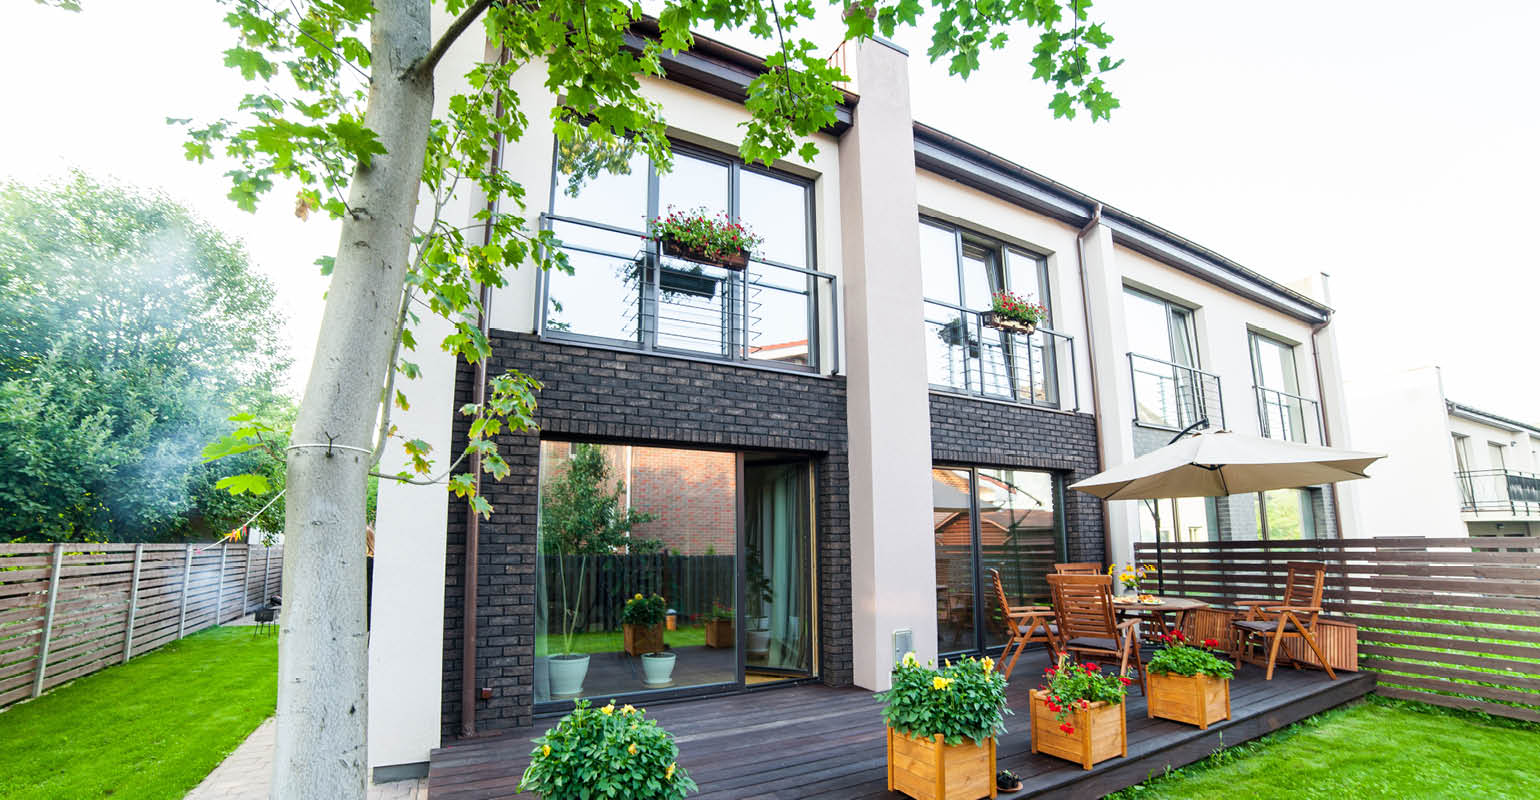 Garden Style Apartment Communities Outperform the Market | National